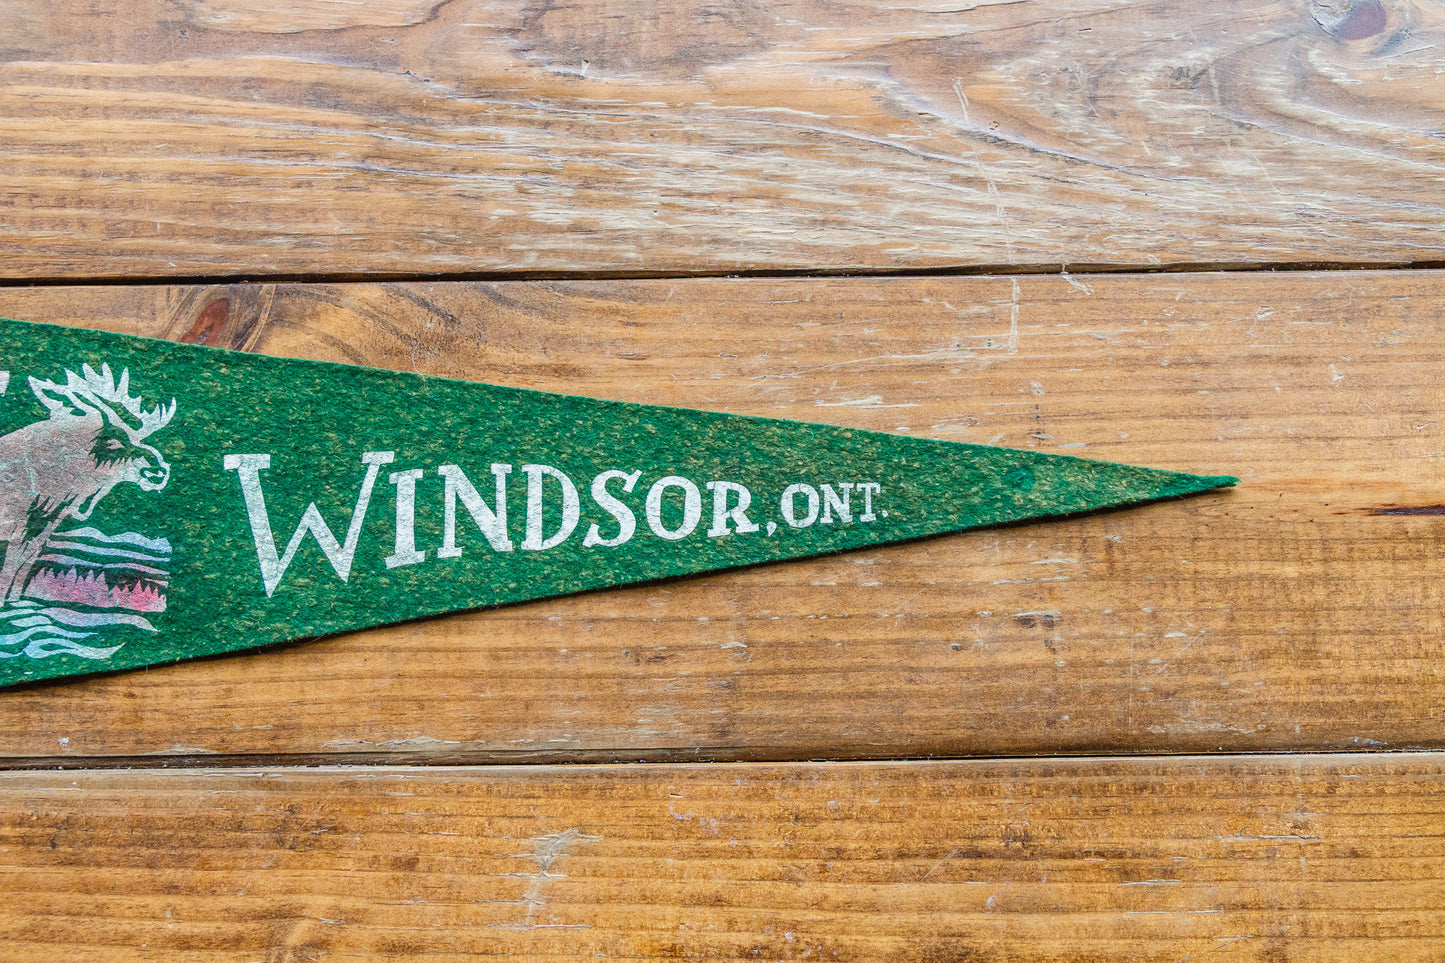 Windsor Ontario Canada Green Felt Pennant Vintage Moose Wall Decor - Eagle's Eye Finds